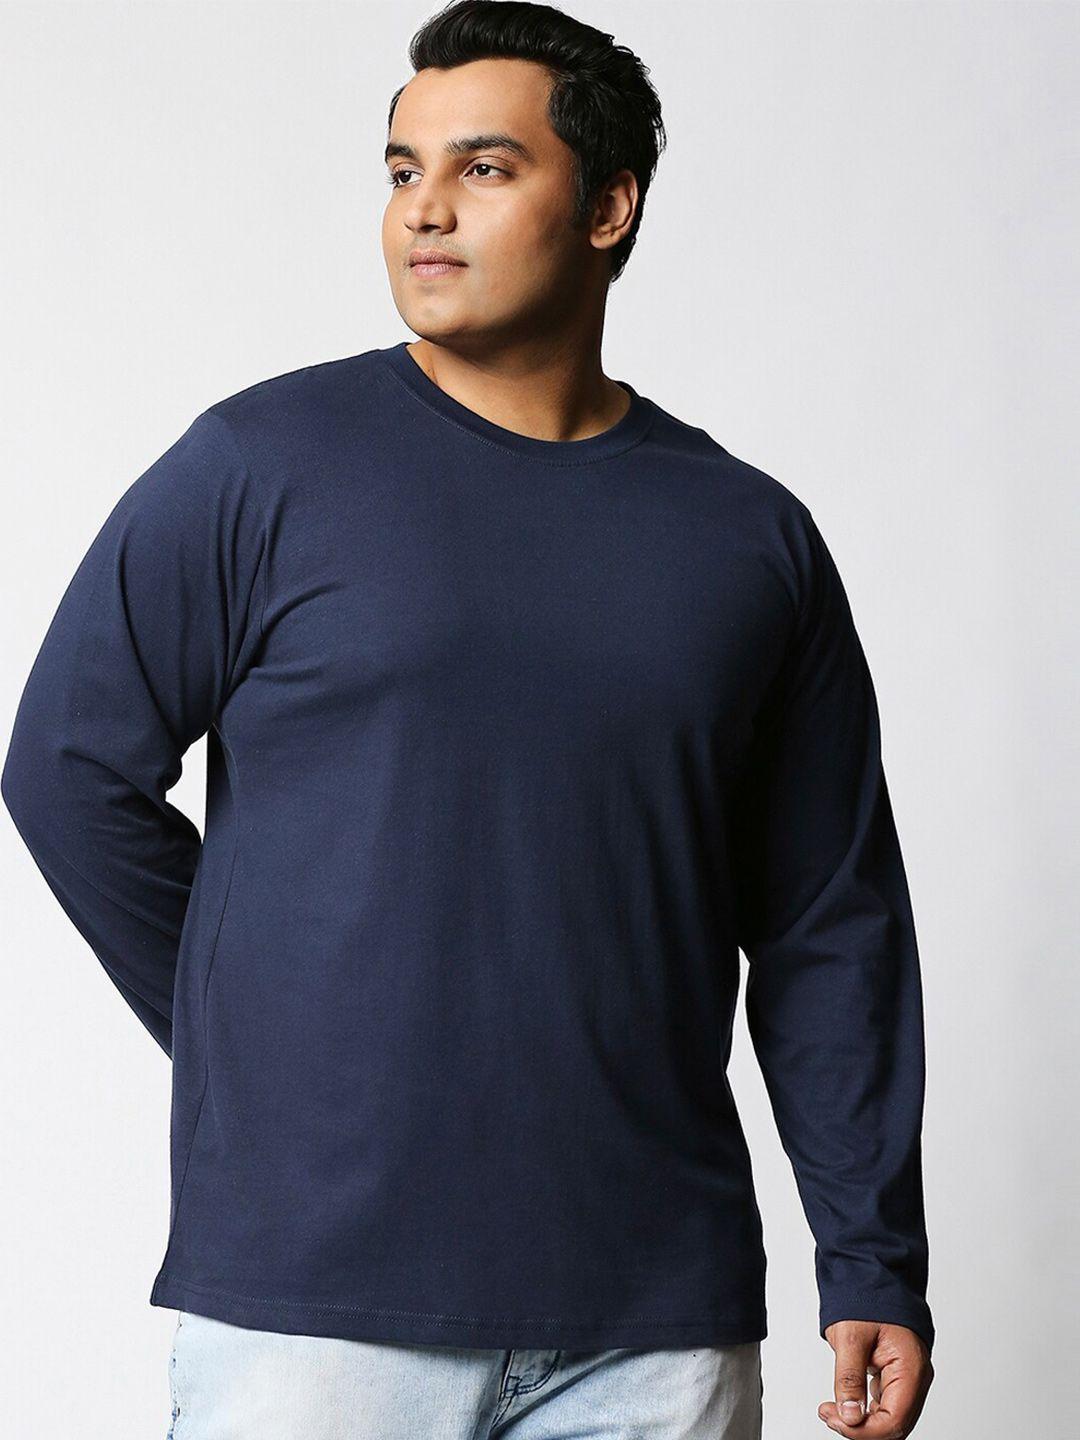 bewakoof-men-blue-v-neck-t-shirt